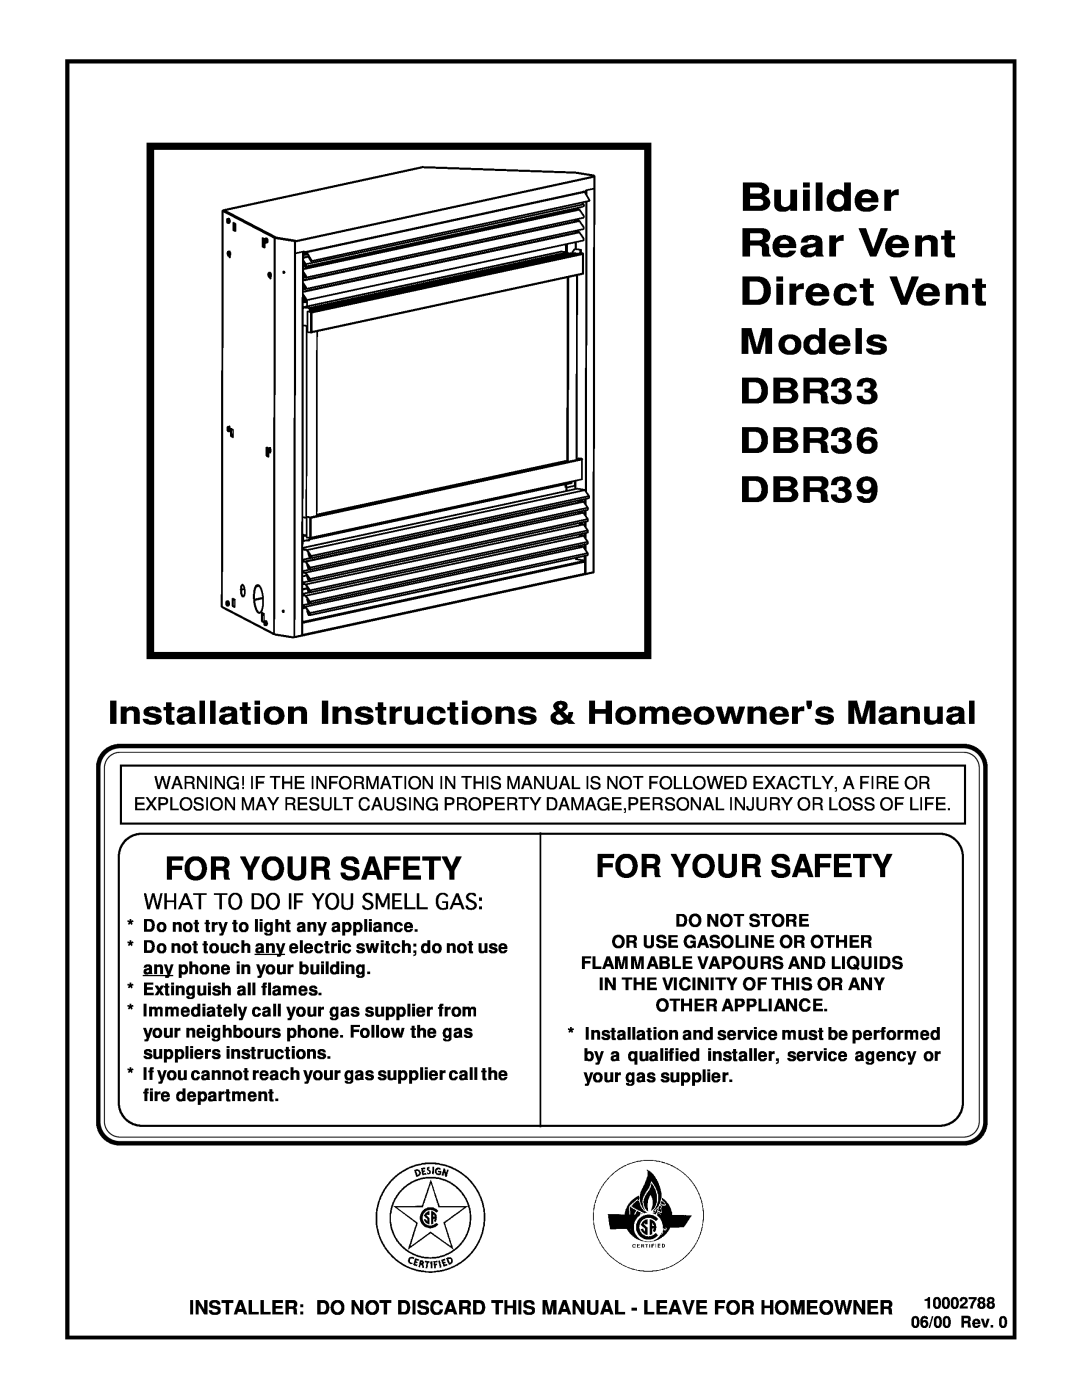 Vermont Casting installation instructions Builder Rear Vent Direct Vent, Models DBR33 DBR36 DBR39, For Your Safety 